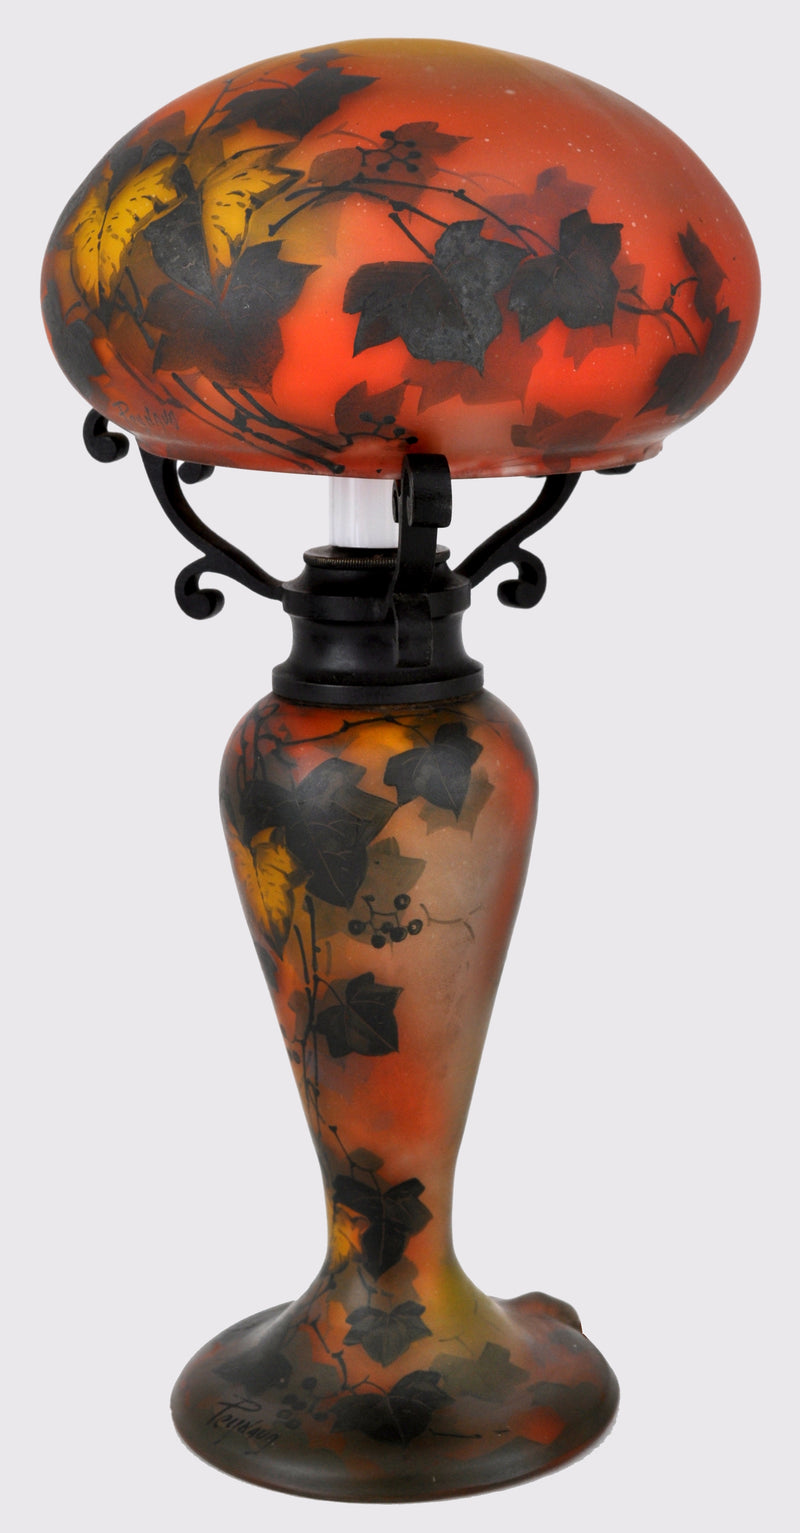 Antique Art Nouveau Hand-Painted 'Mushroom' Cameo Glass Lamp by Jean-Simon Peynaud (French, 1869-1952), Circa 1915